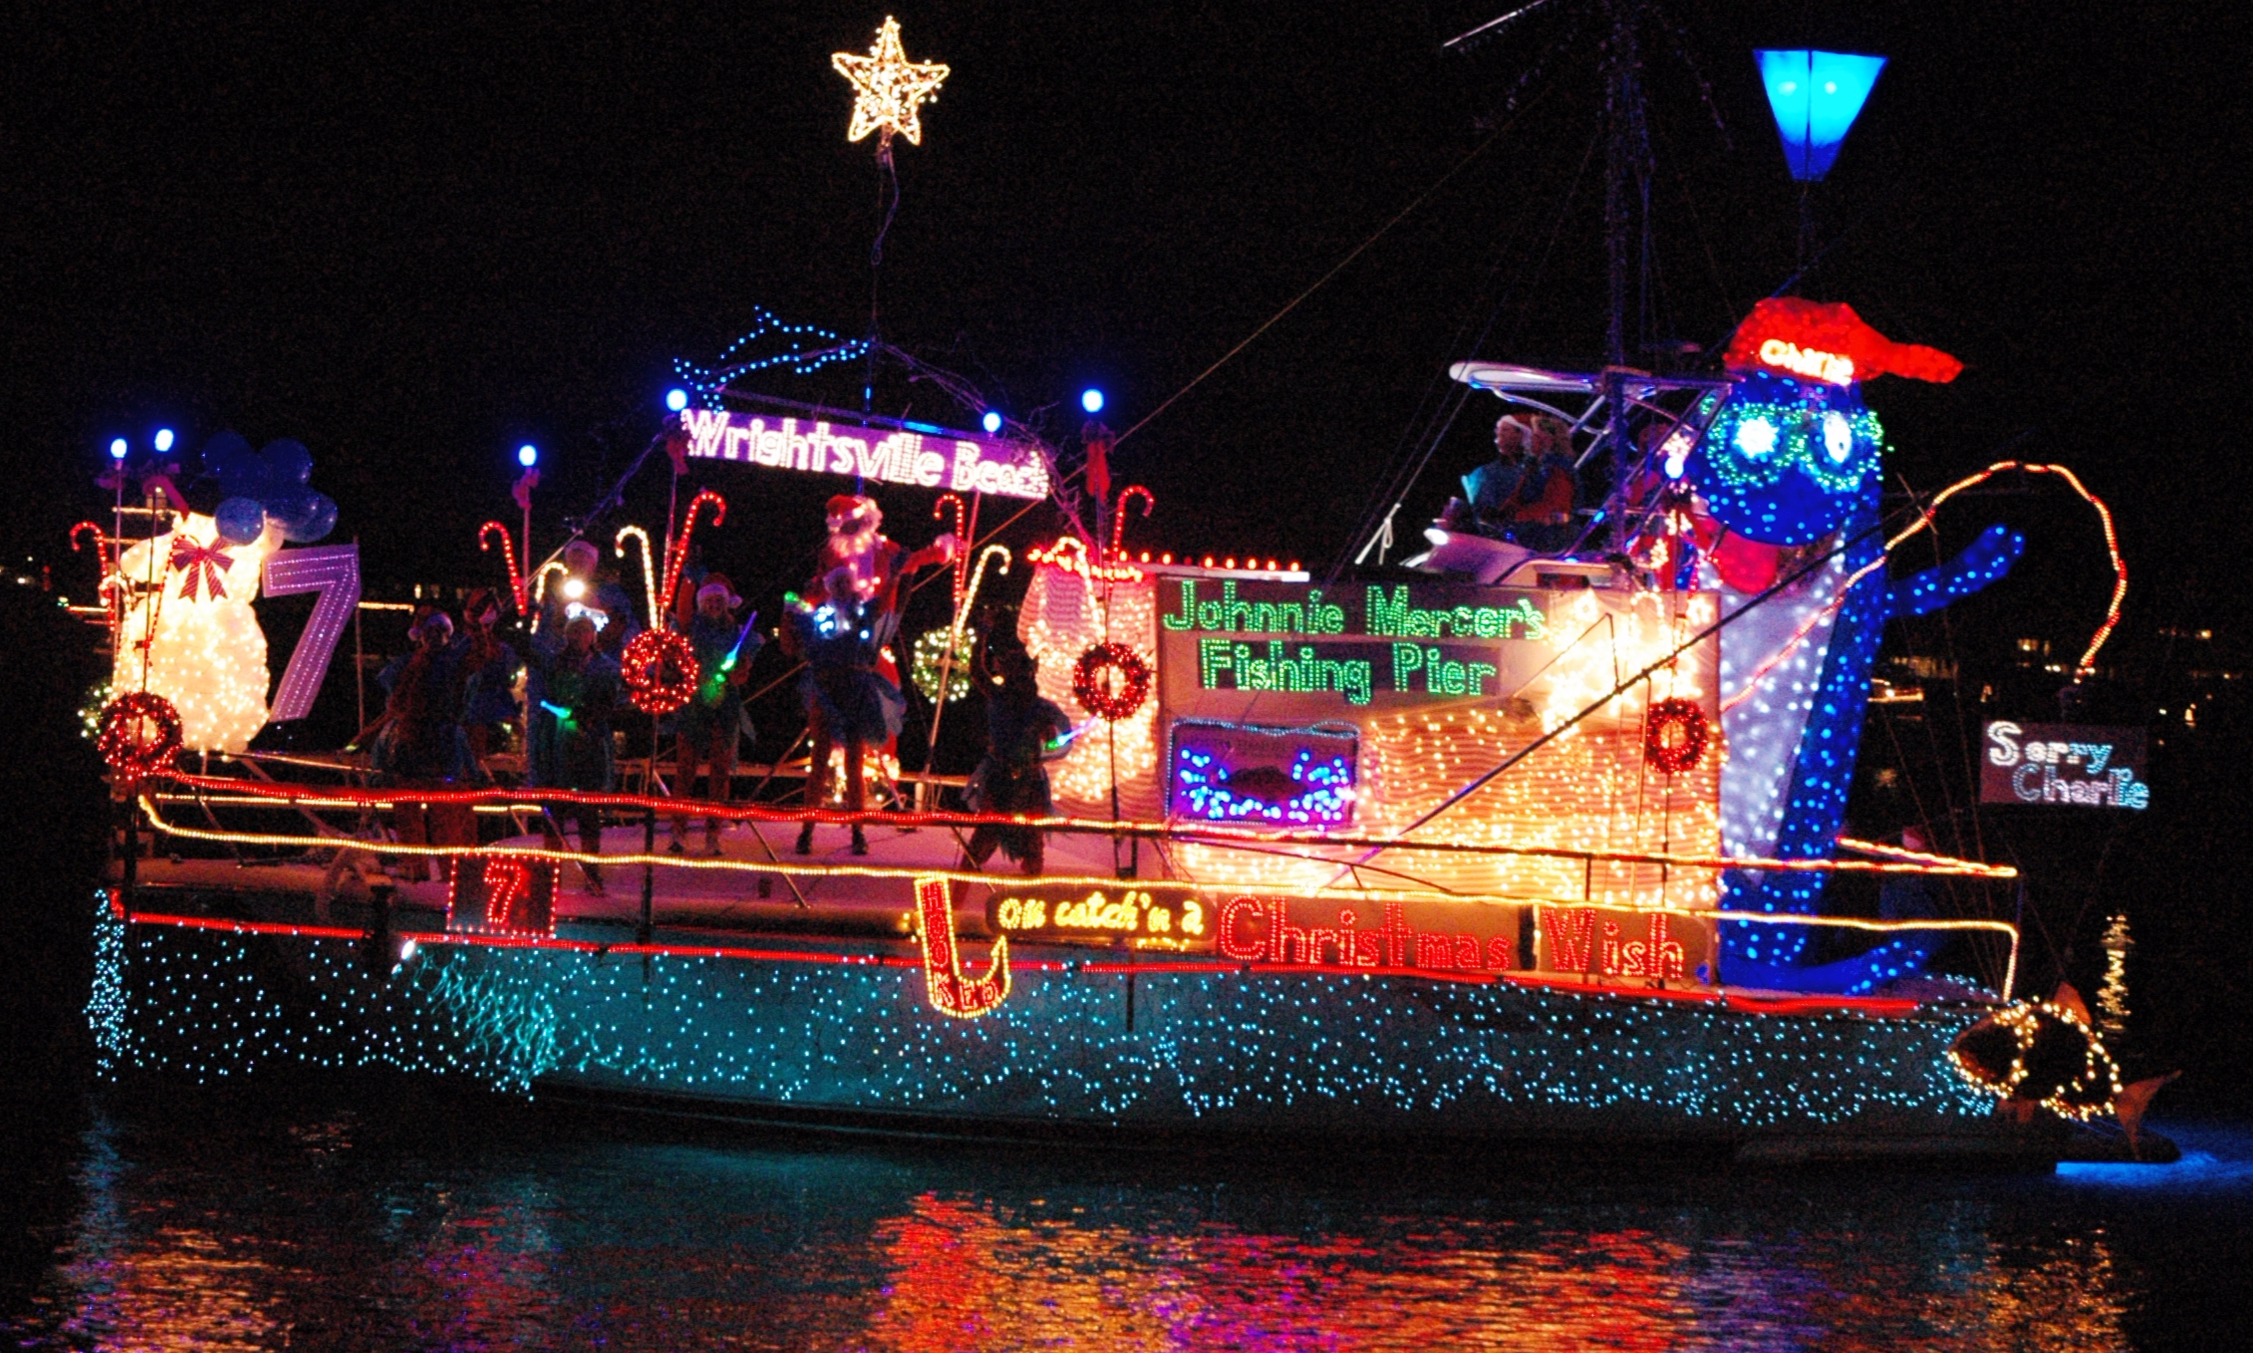 Holiday Flotilla decorated with lights in North Carolina